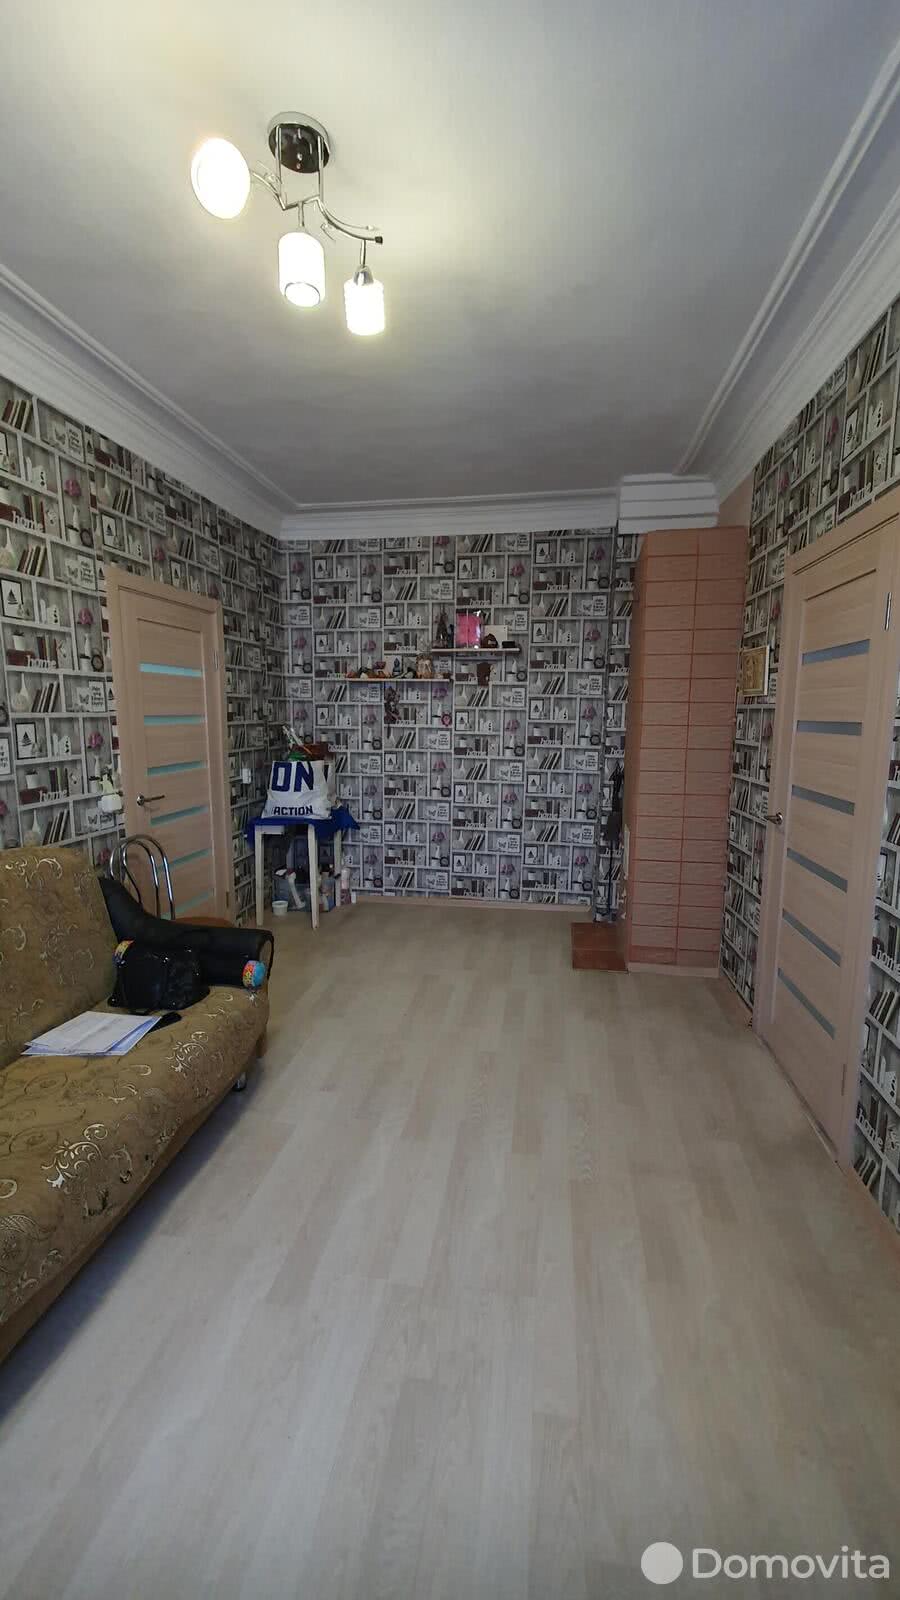 квартира, Борисов, ул. Черняховского, д. 2а, стоимость продажи 97 848 р.